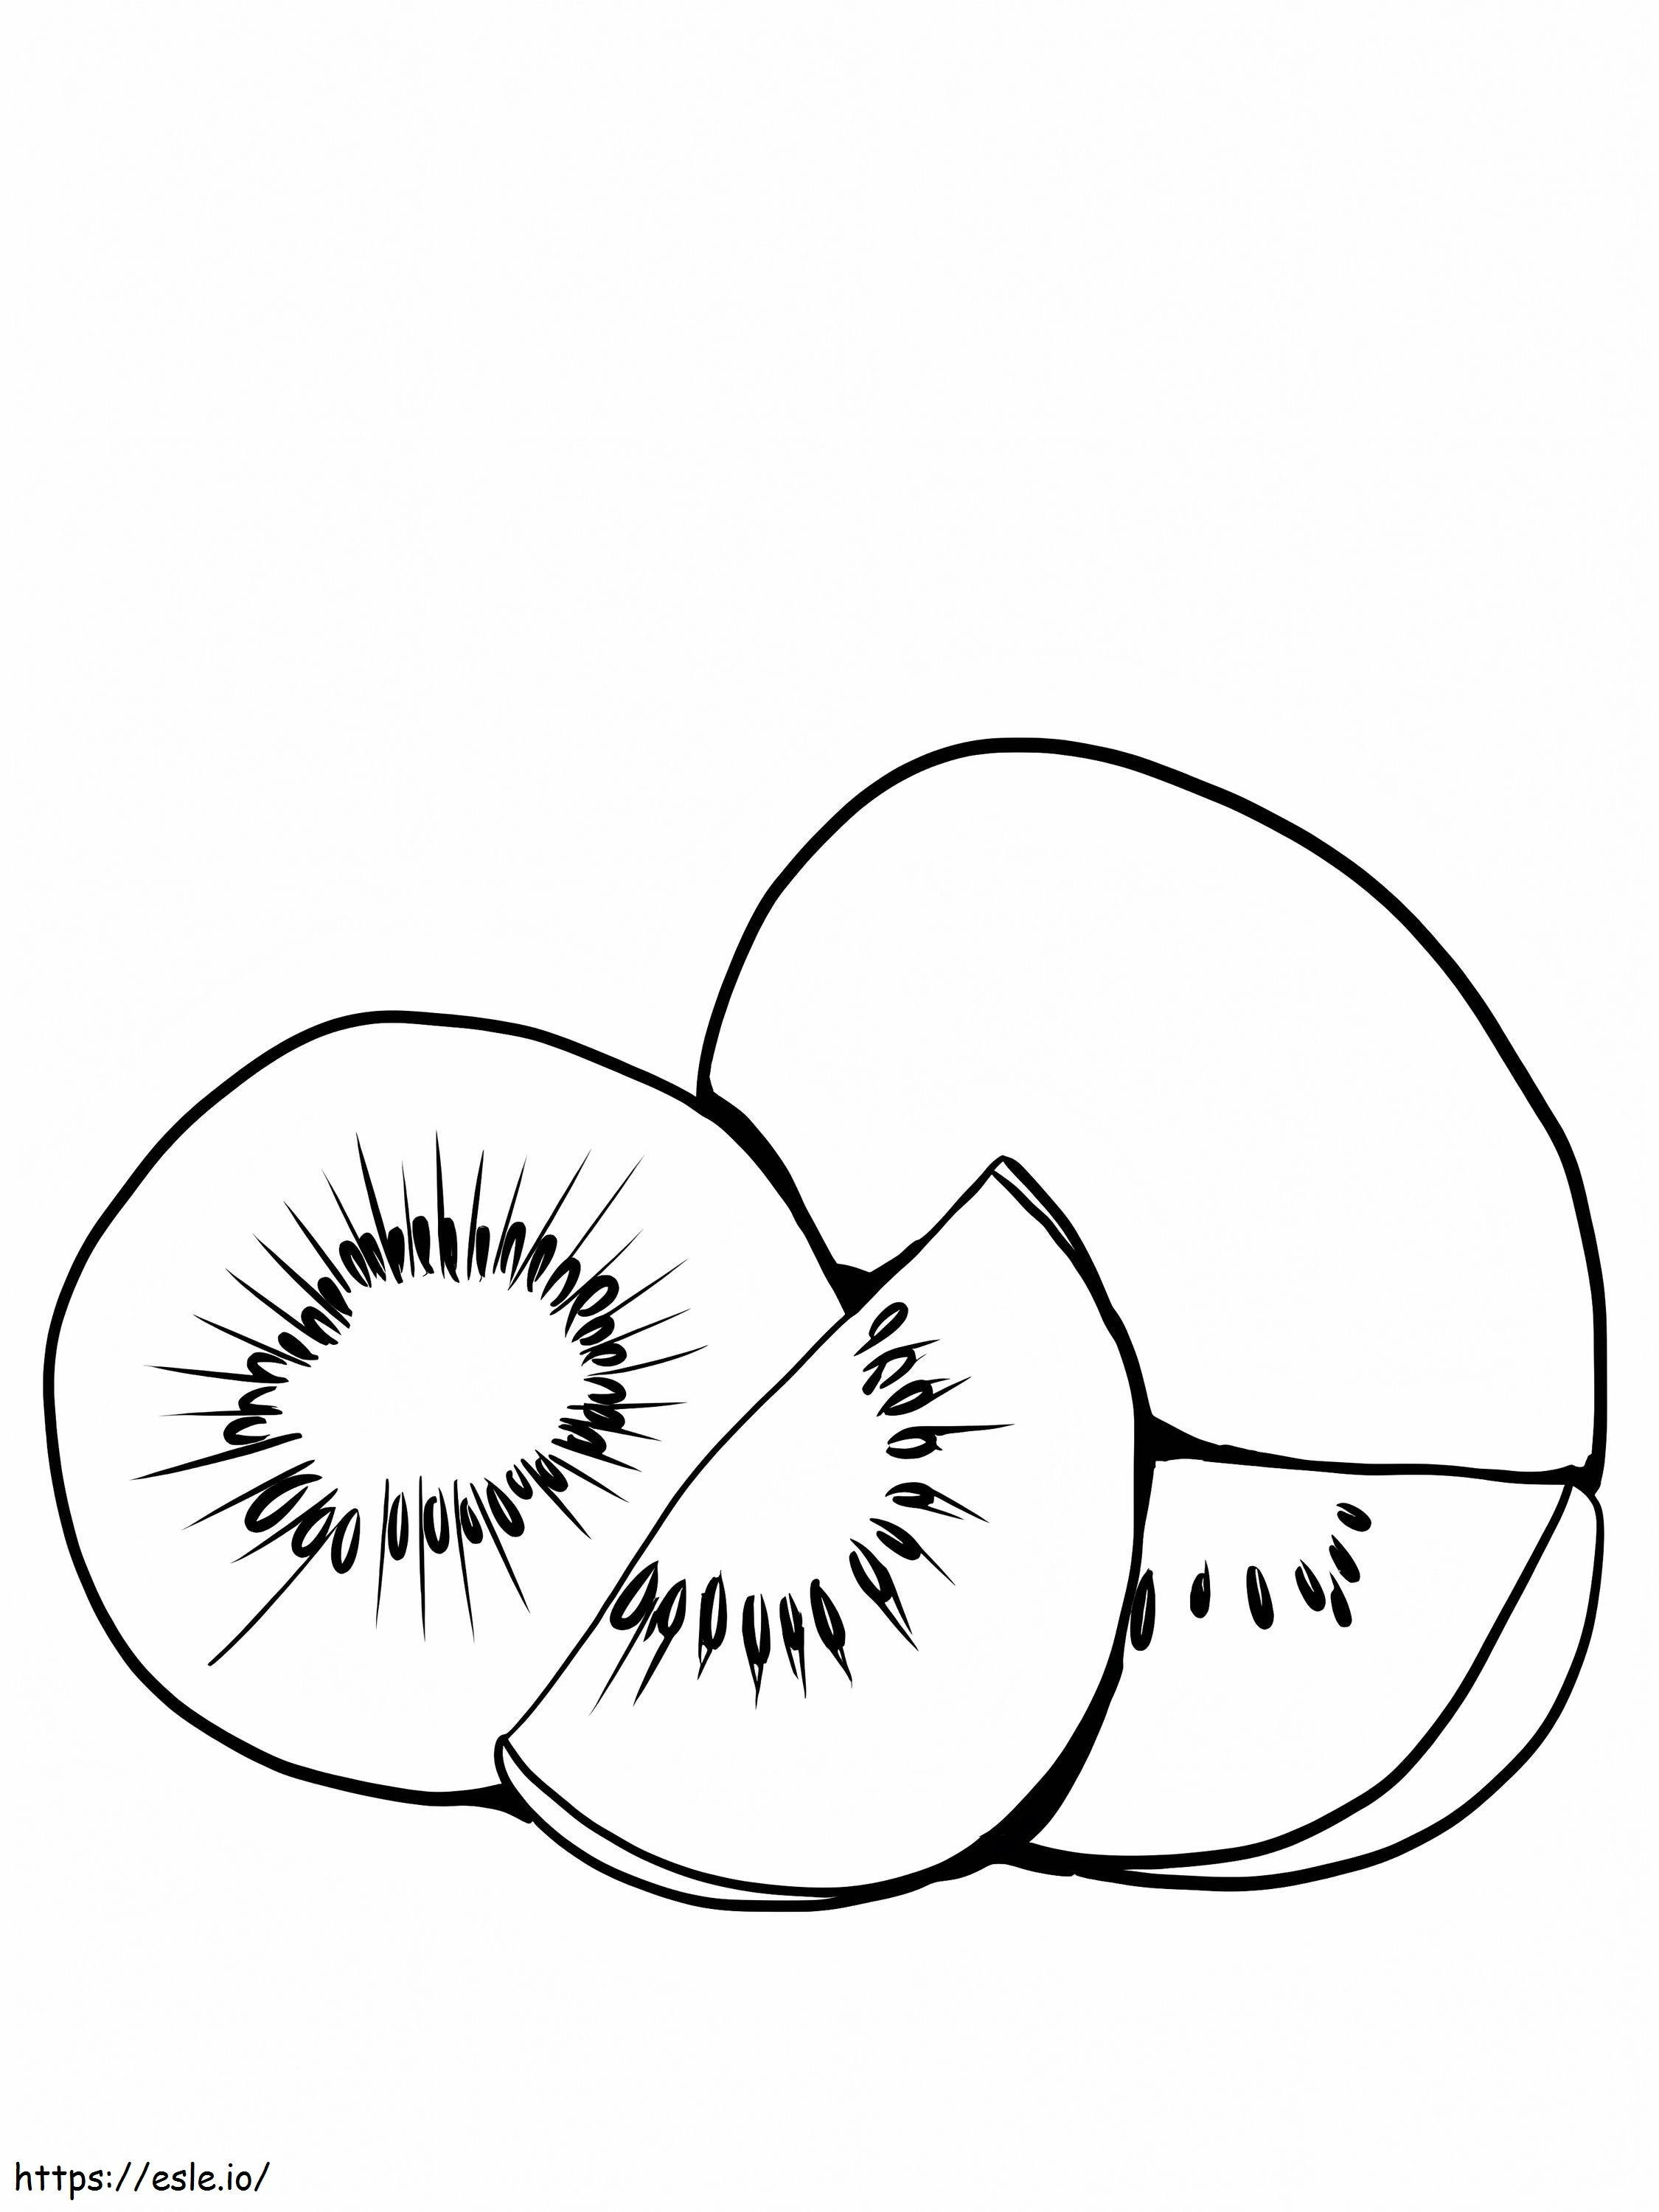 Kiwi Fruits coloring page